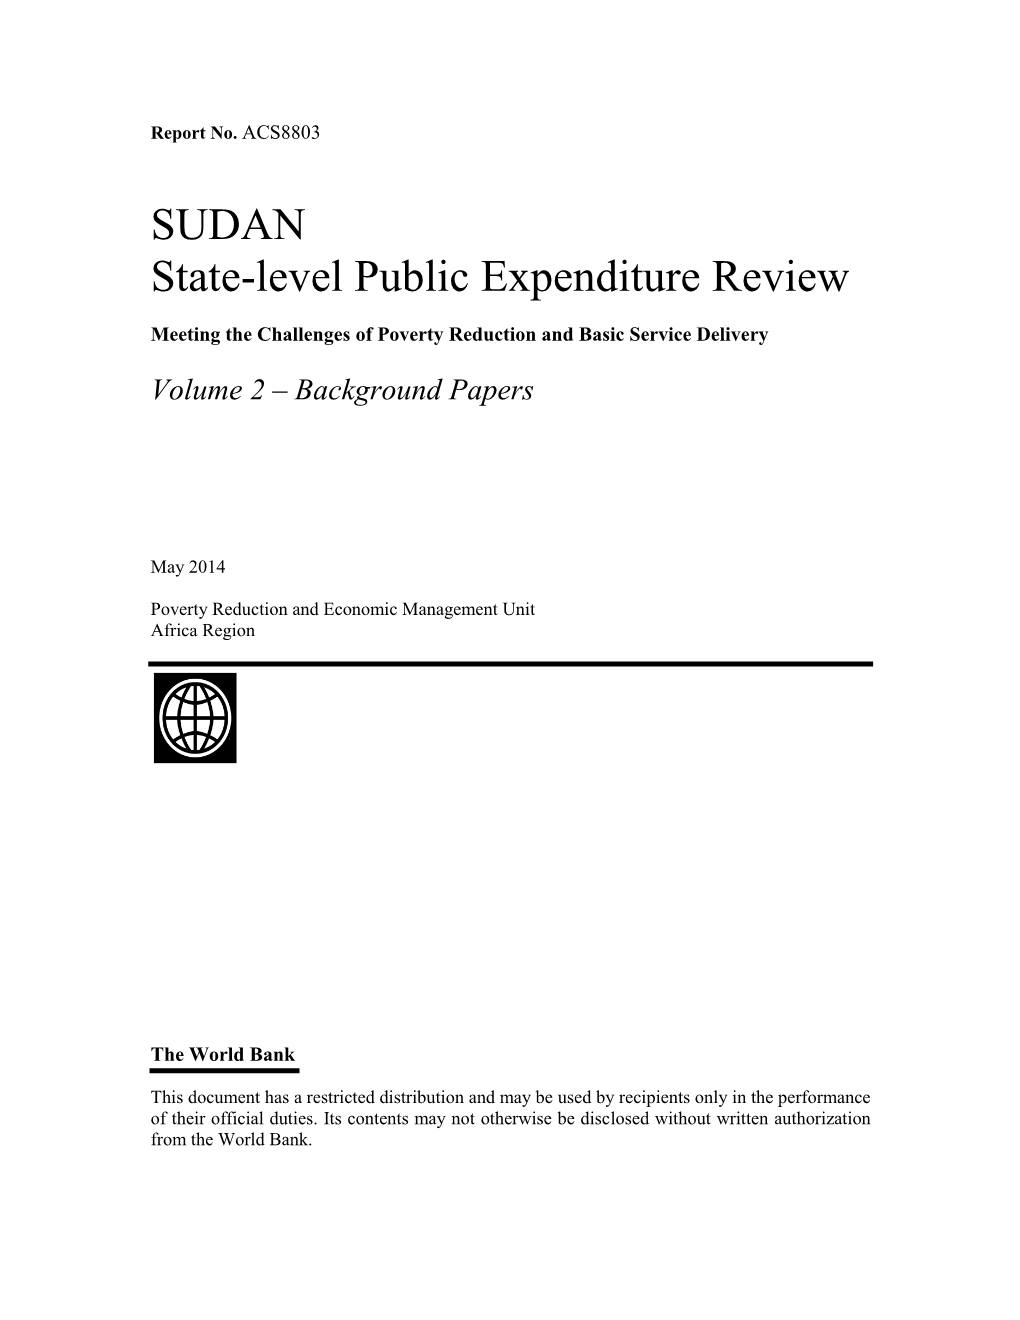 SUDAN State-Level Public Expenditure Review